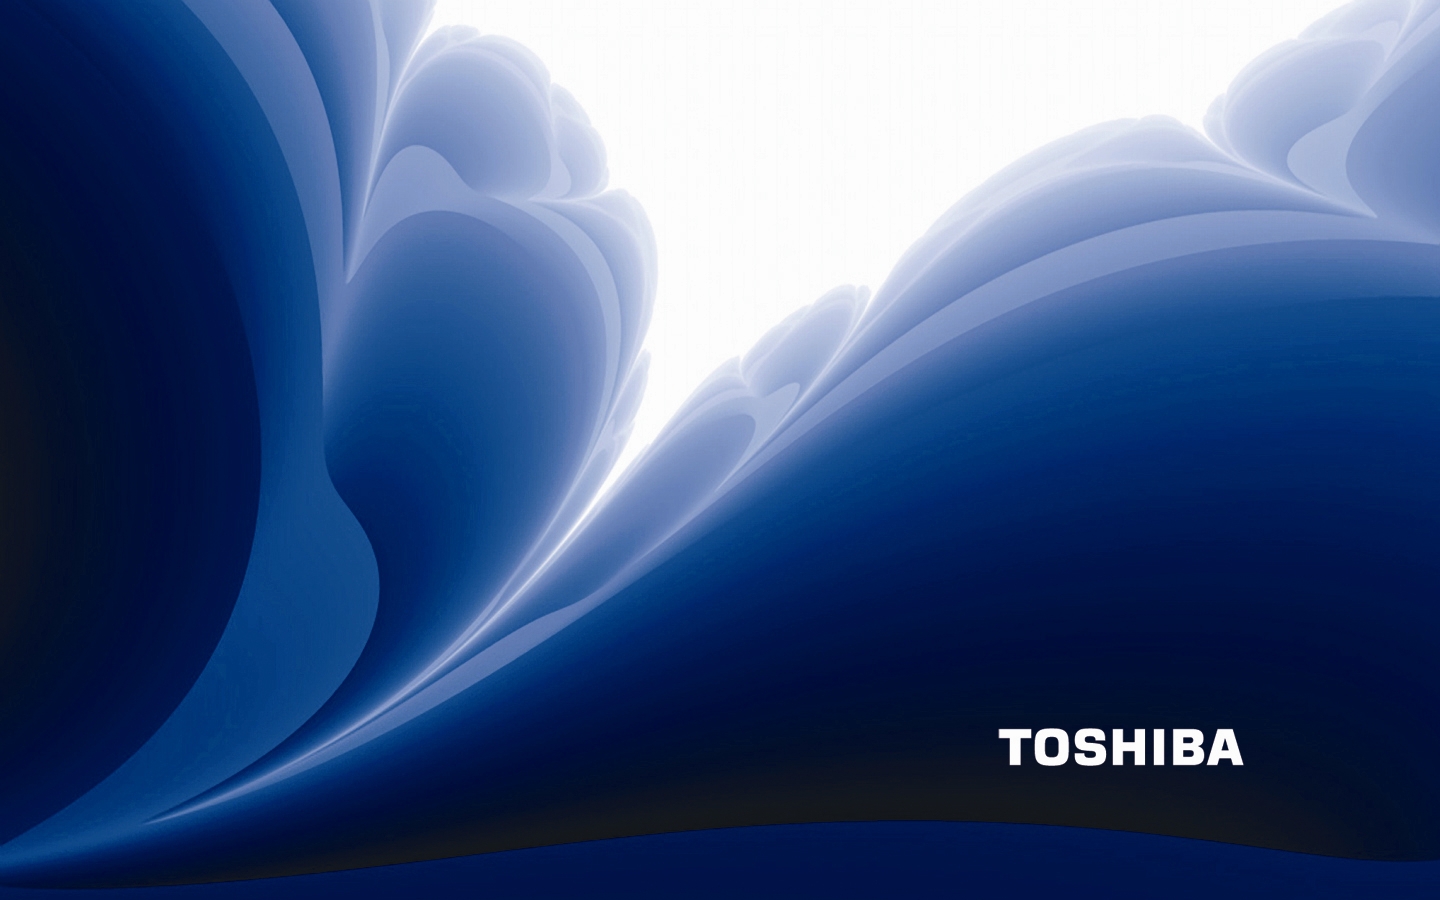 Toshiba logo wallpaper | danasrhj.top